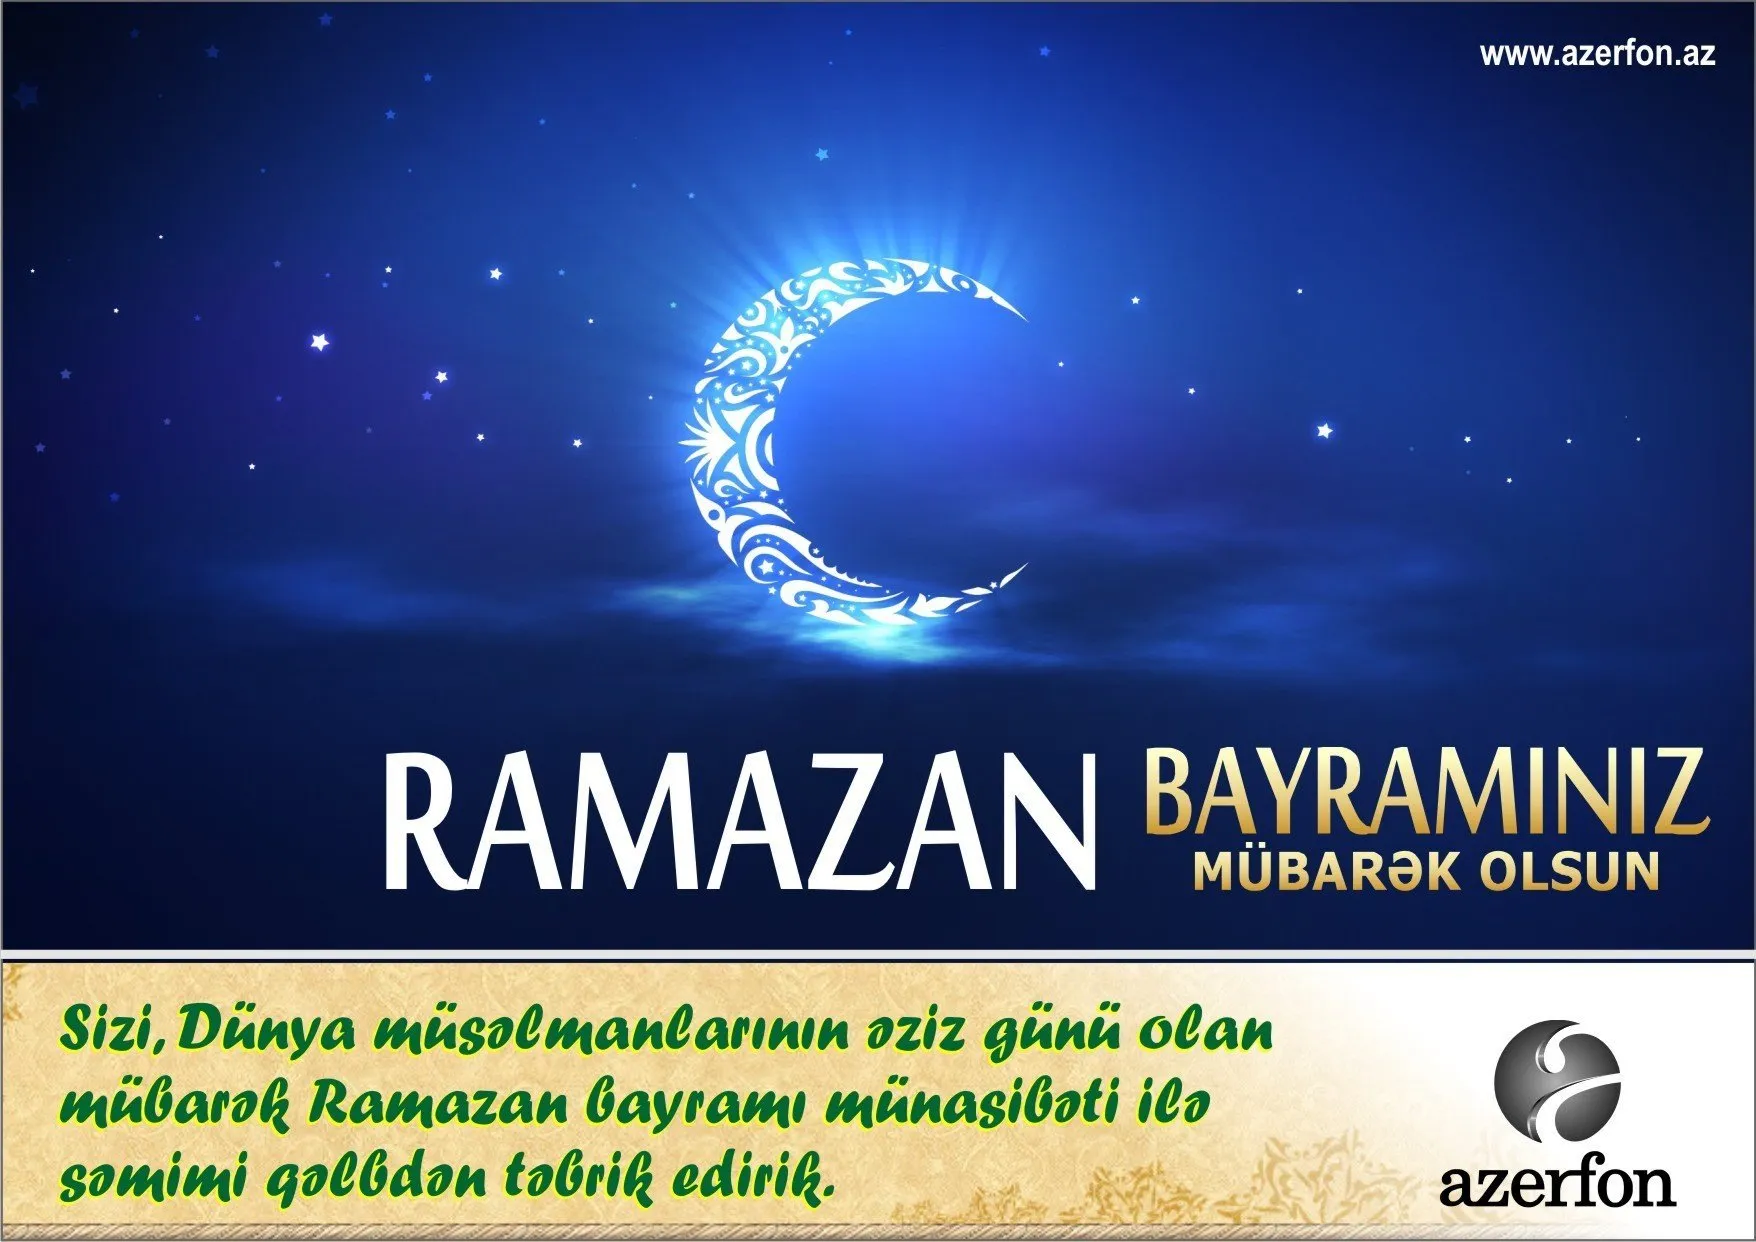 Открытки на турецком с праздником Рамадан